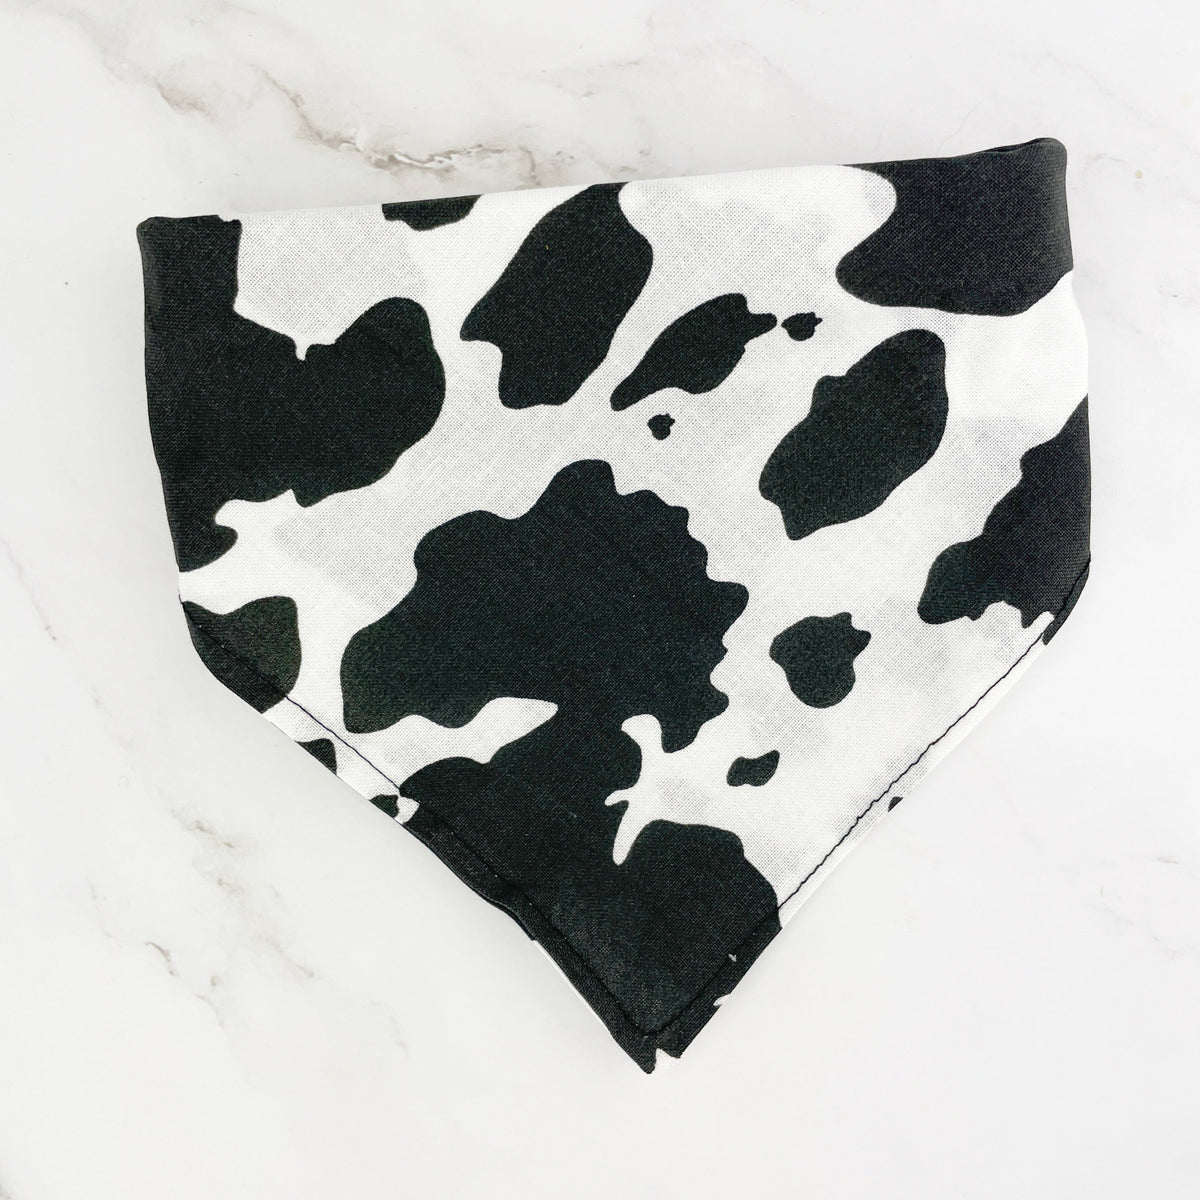 Cow print dog bandana on a marble background